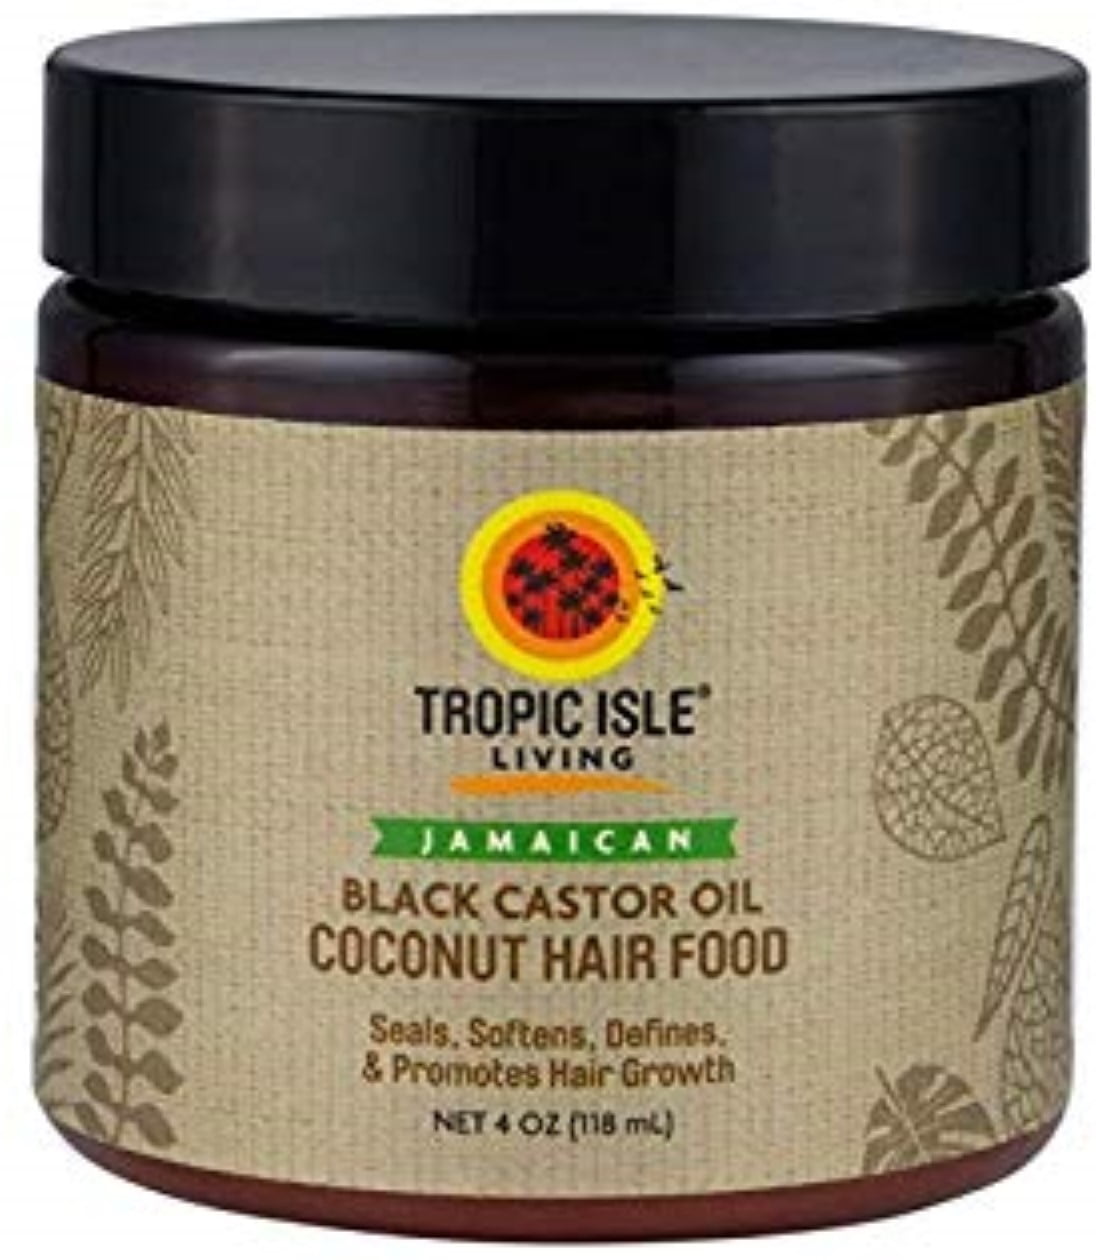 30 Top Pictures Tropic Isle Living Jamaican Black Castor Oil Hair Food : Tropic Isle Living Coconut Jamaican Black Castor Oil Hair ...